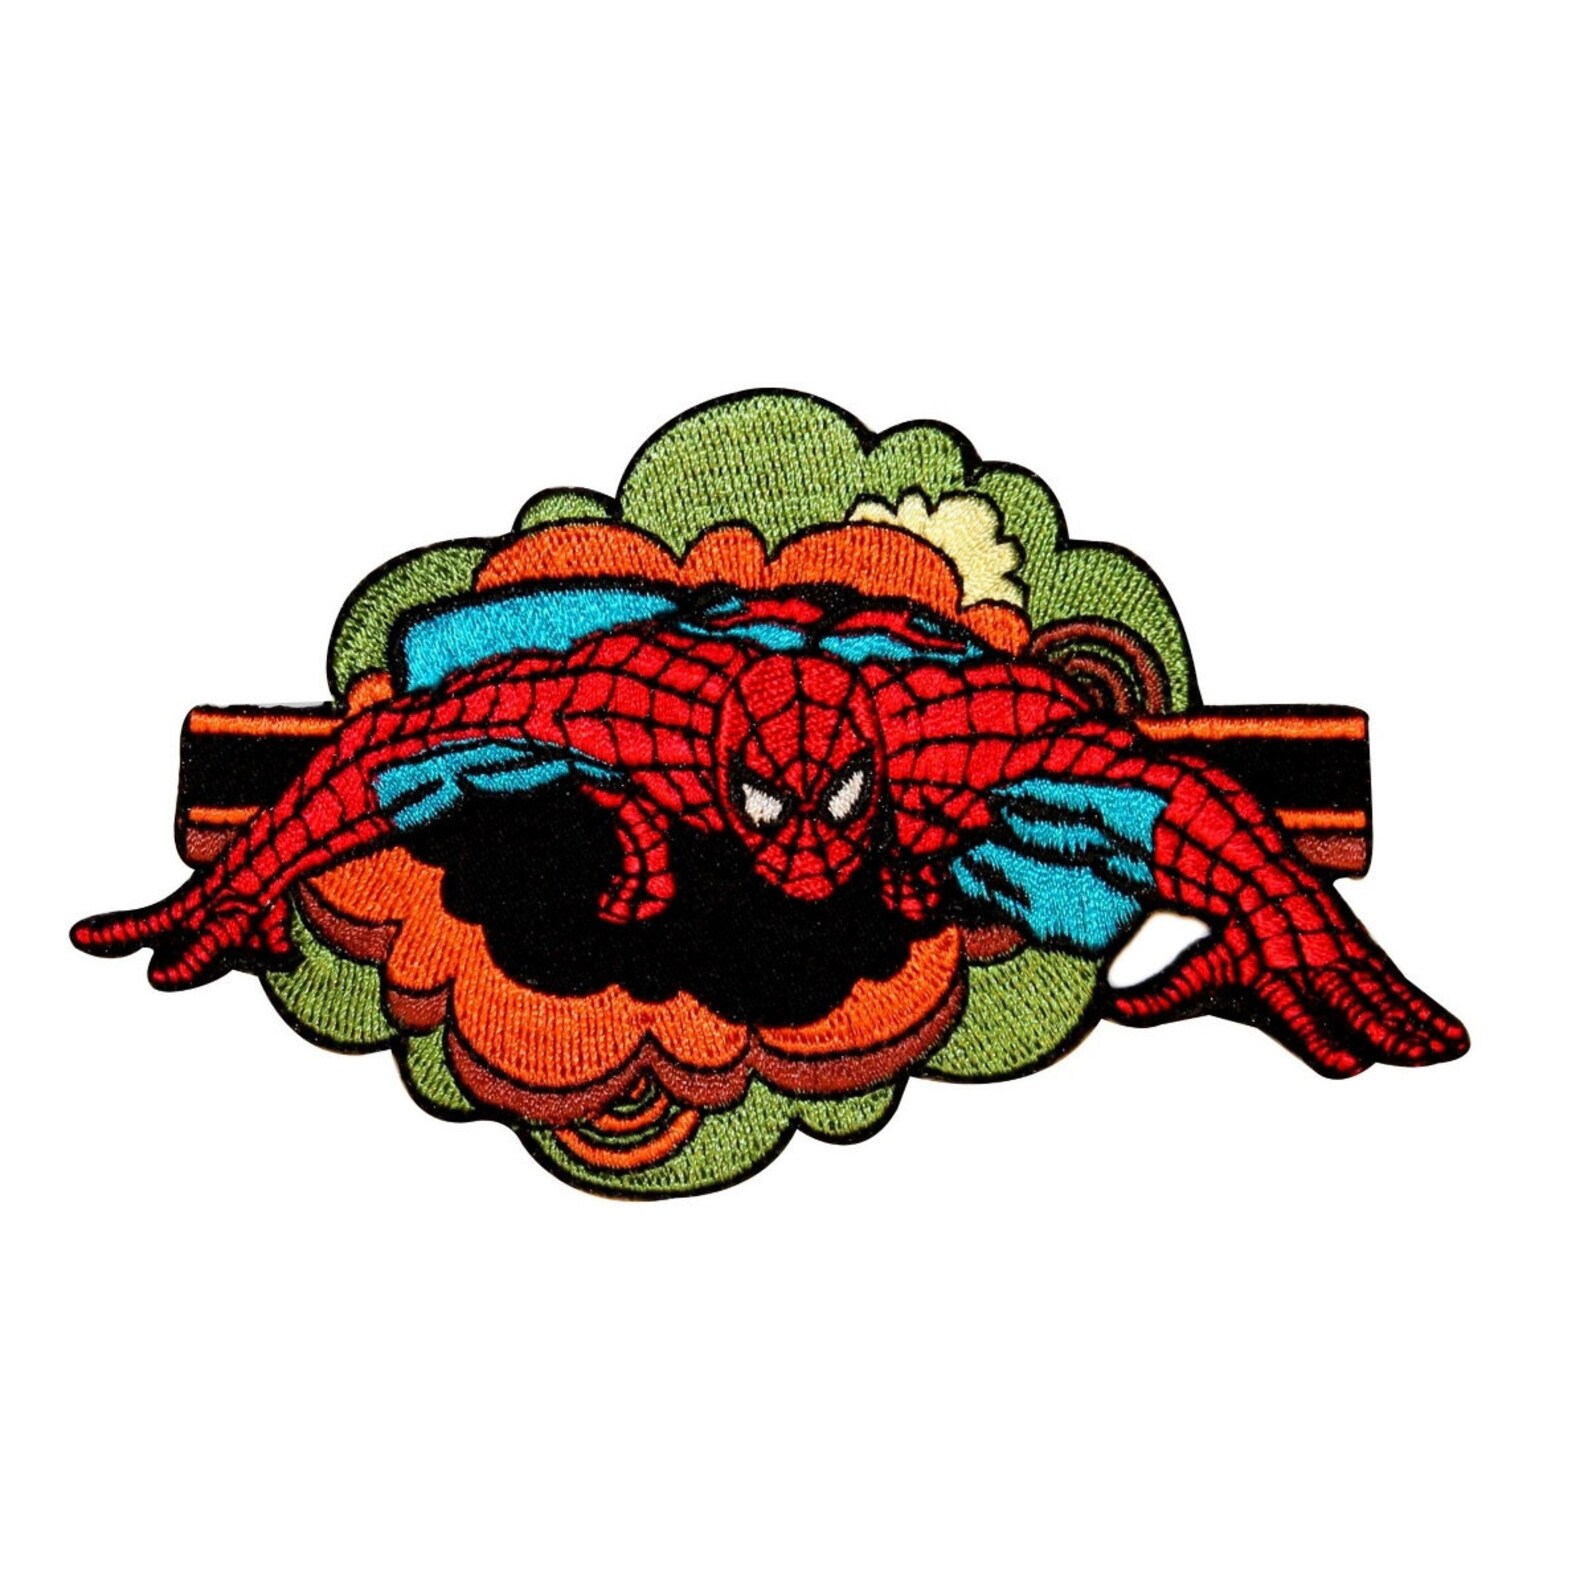 Marvel spider man патчи. Вышивные значки с человеком пауком. Патч с пауком. Патч пауков. Patches the Spider.